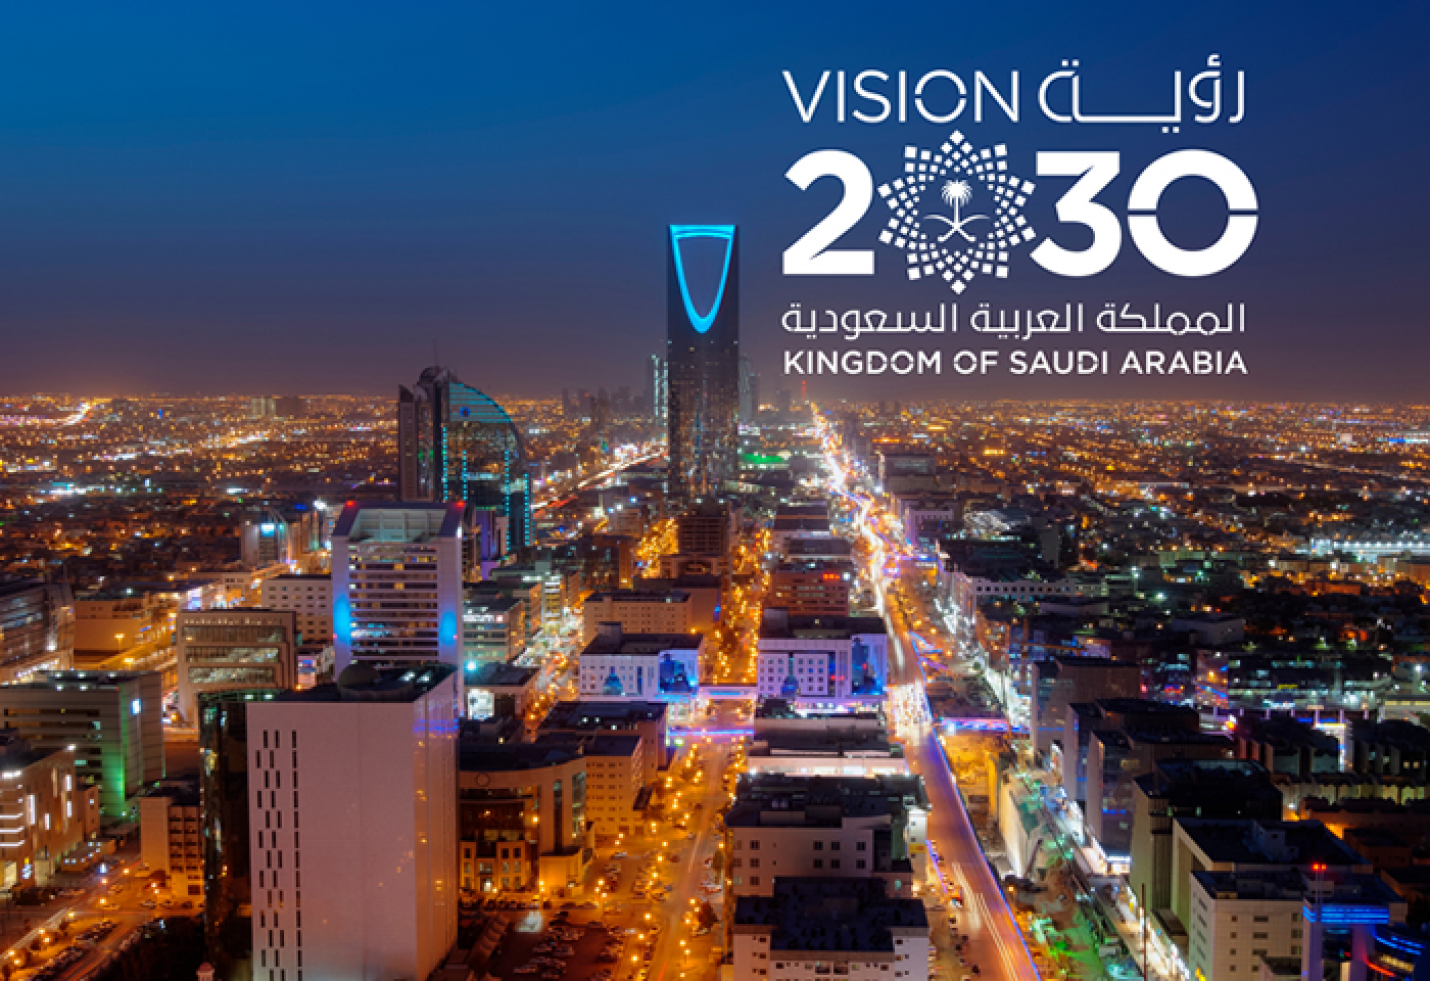 Saudi Arabia Vision 2030 Plan’s Total Value Crosses $1.1 Trillion